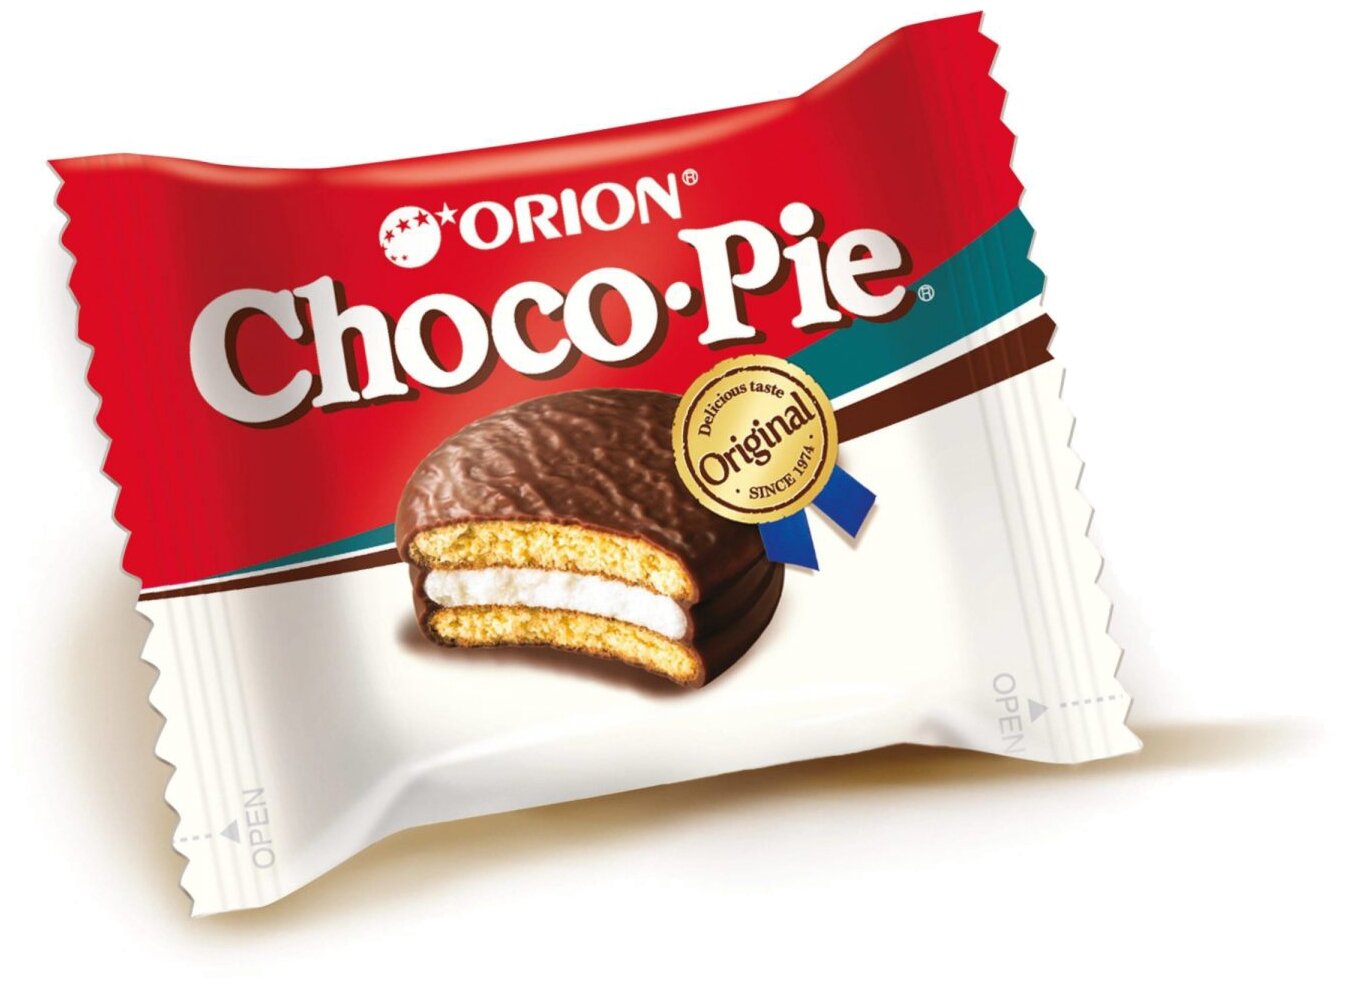 Печенье ORION Choco Pie (12 х 30г) х 8